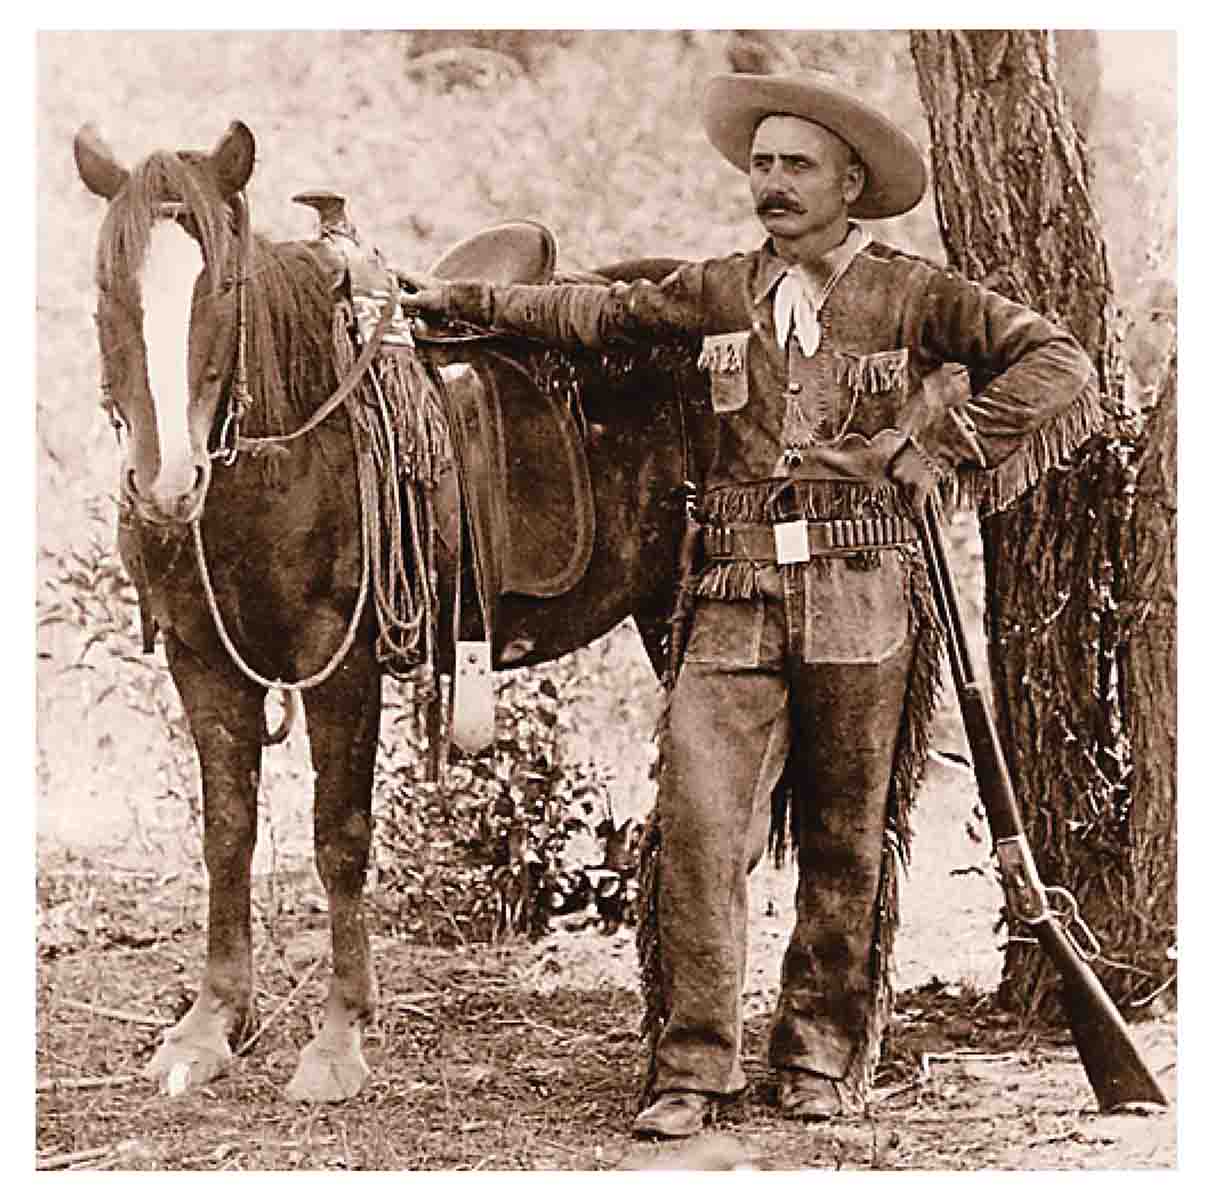 Al Sieber; frontiersman, Civil War veteran and Chief of Scouts